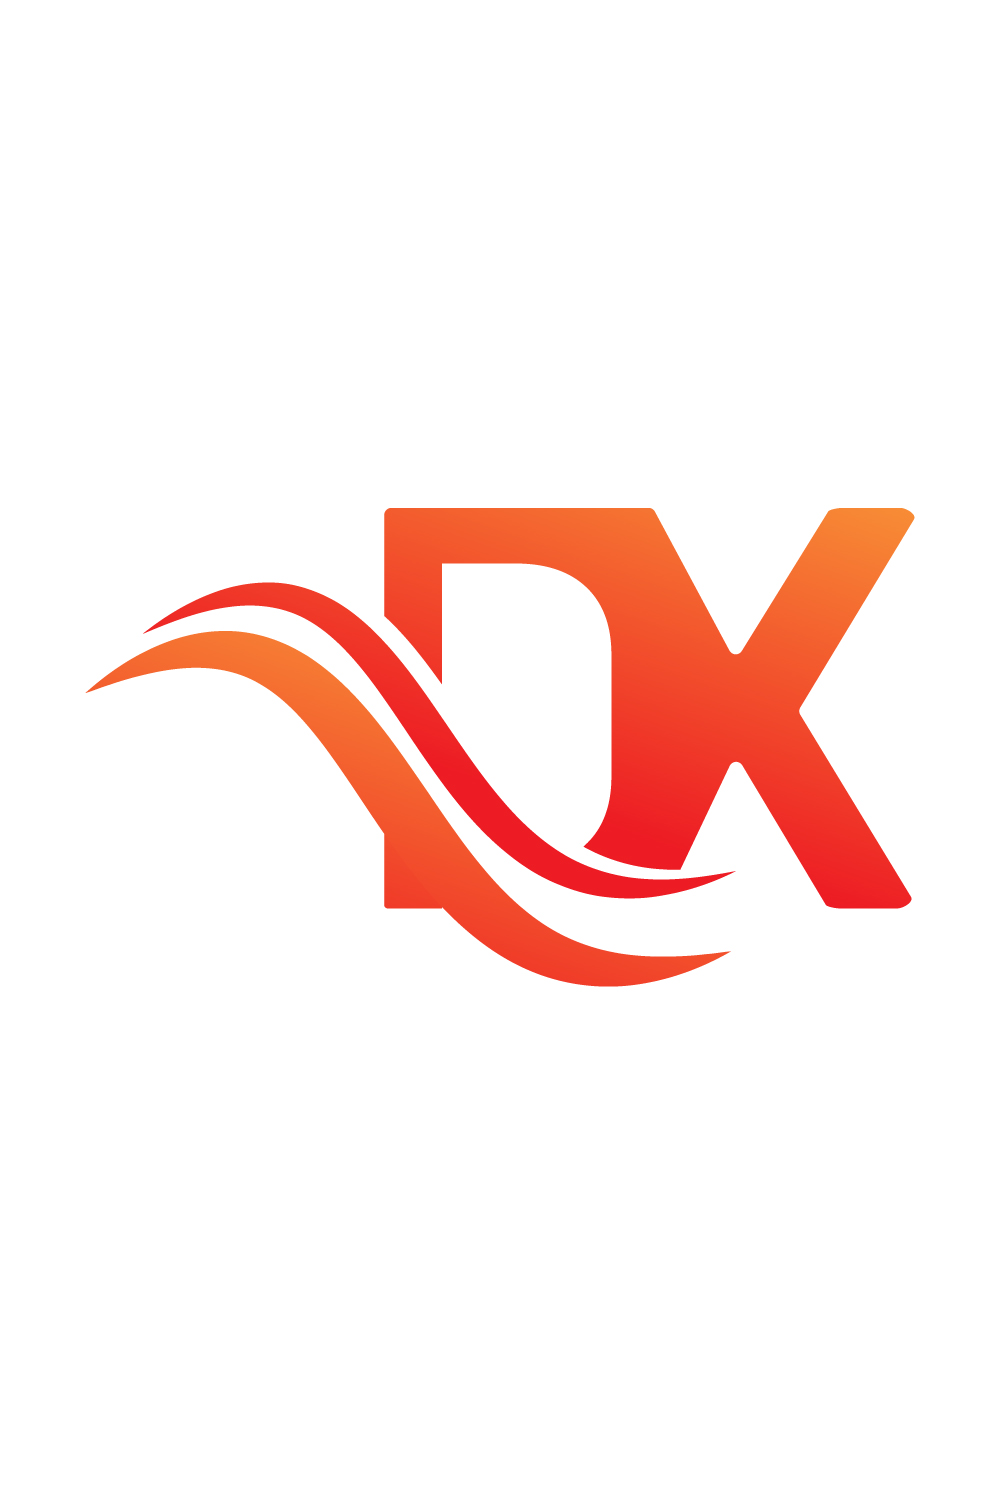 Initials DX letters logo design vector images DX logo template icon orange color logo design XD logo Premium vector best company identity pinterest preview image.